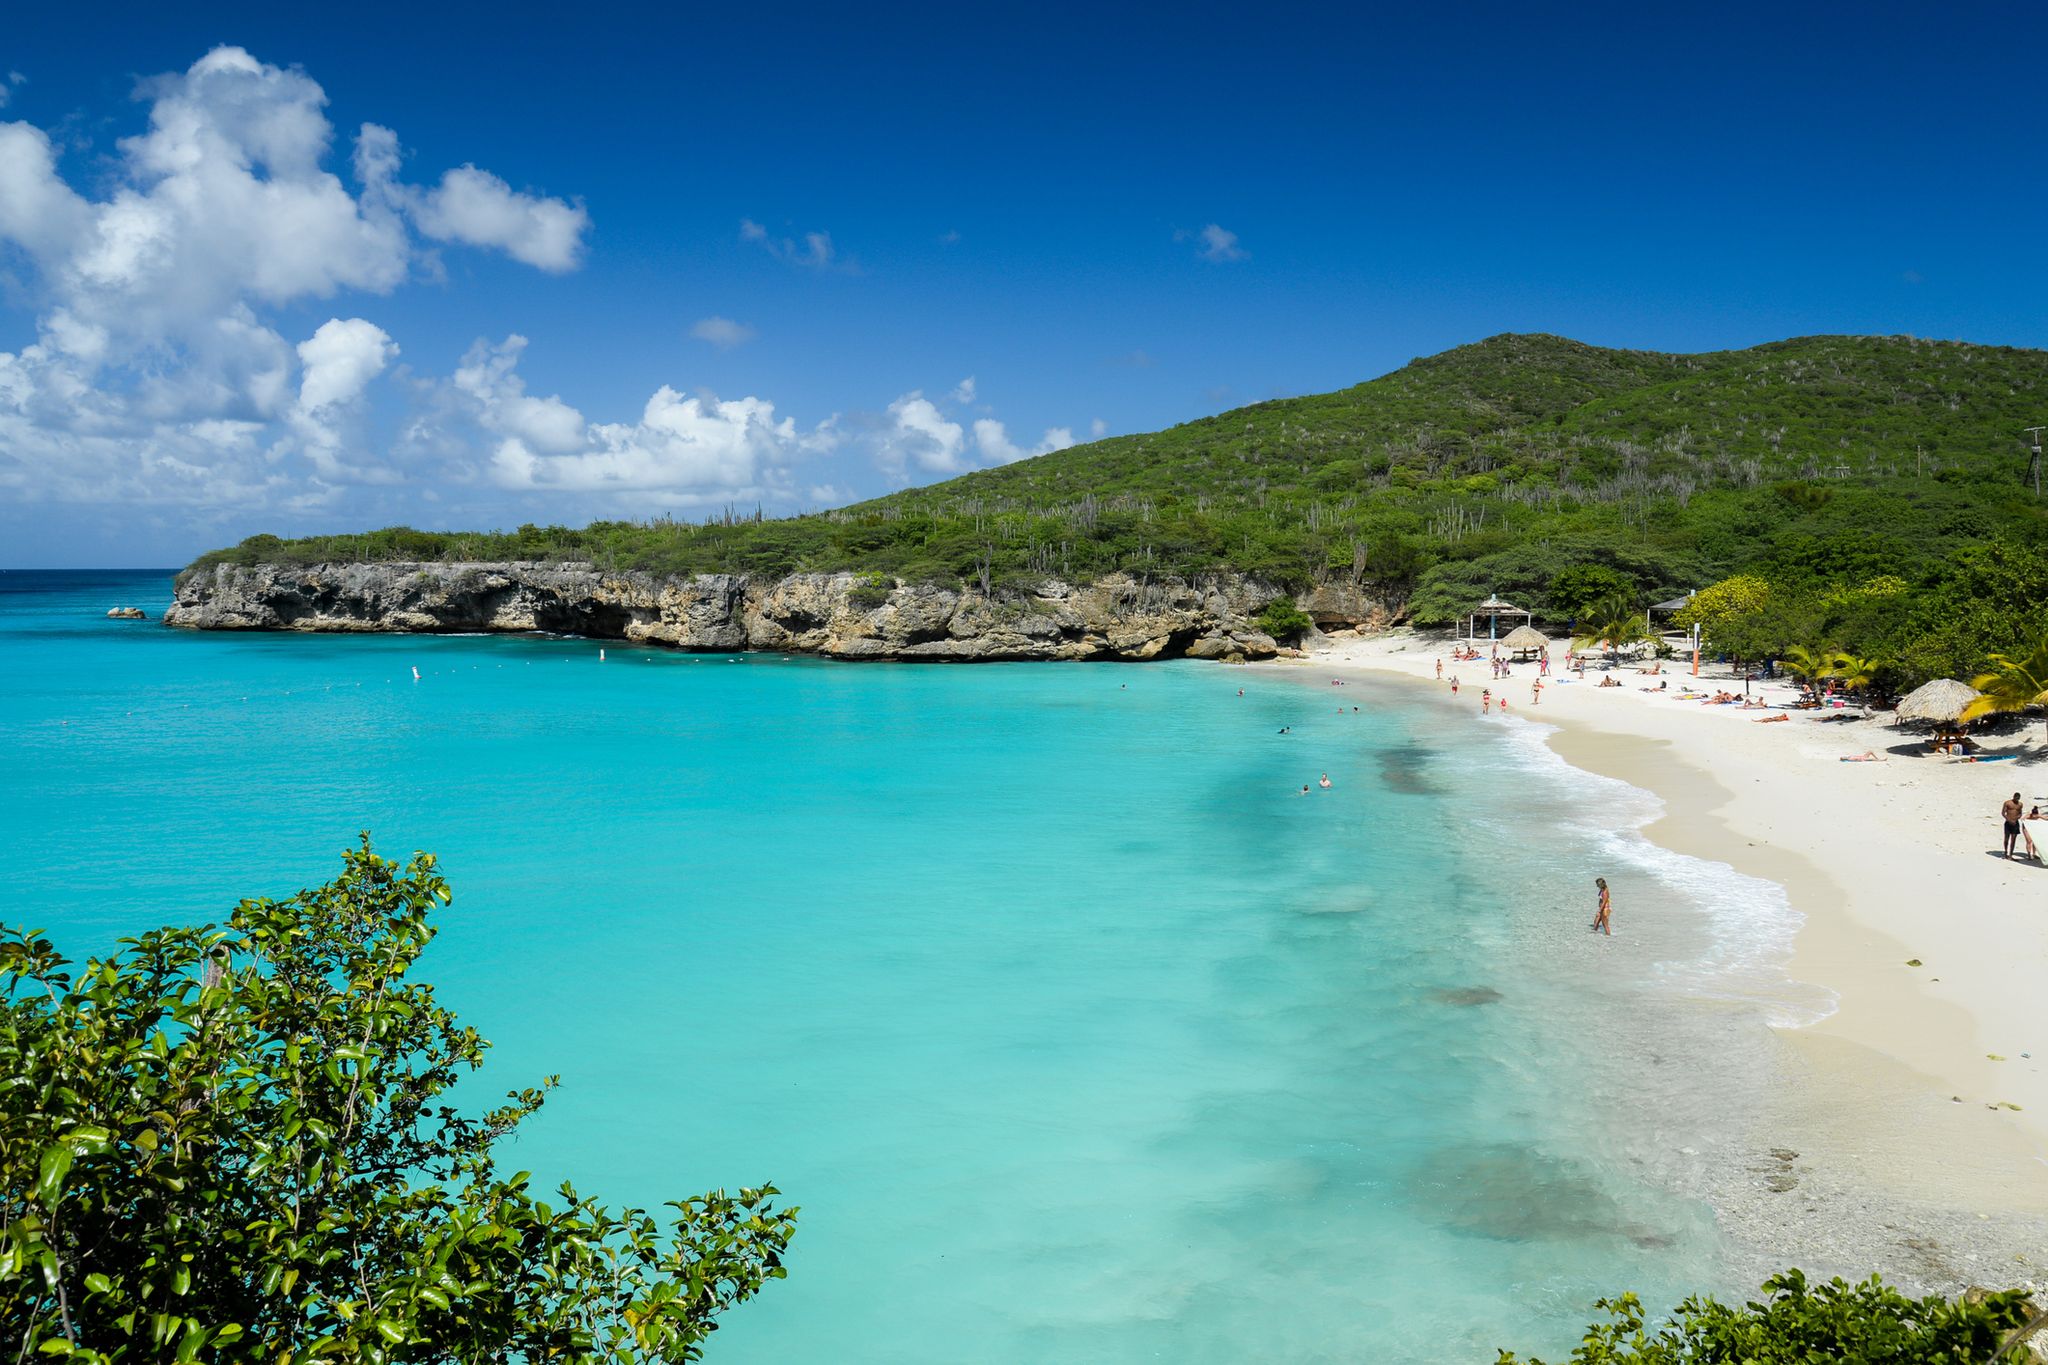 the caribbean beach of abou beach at curacao, netherland antilles